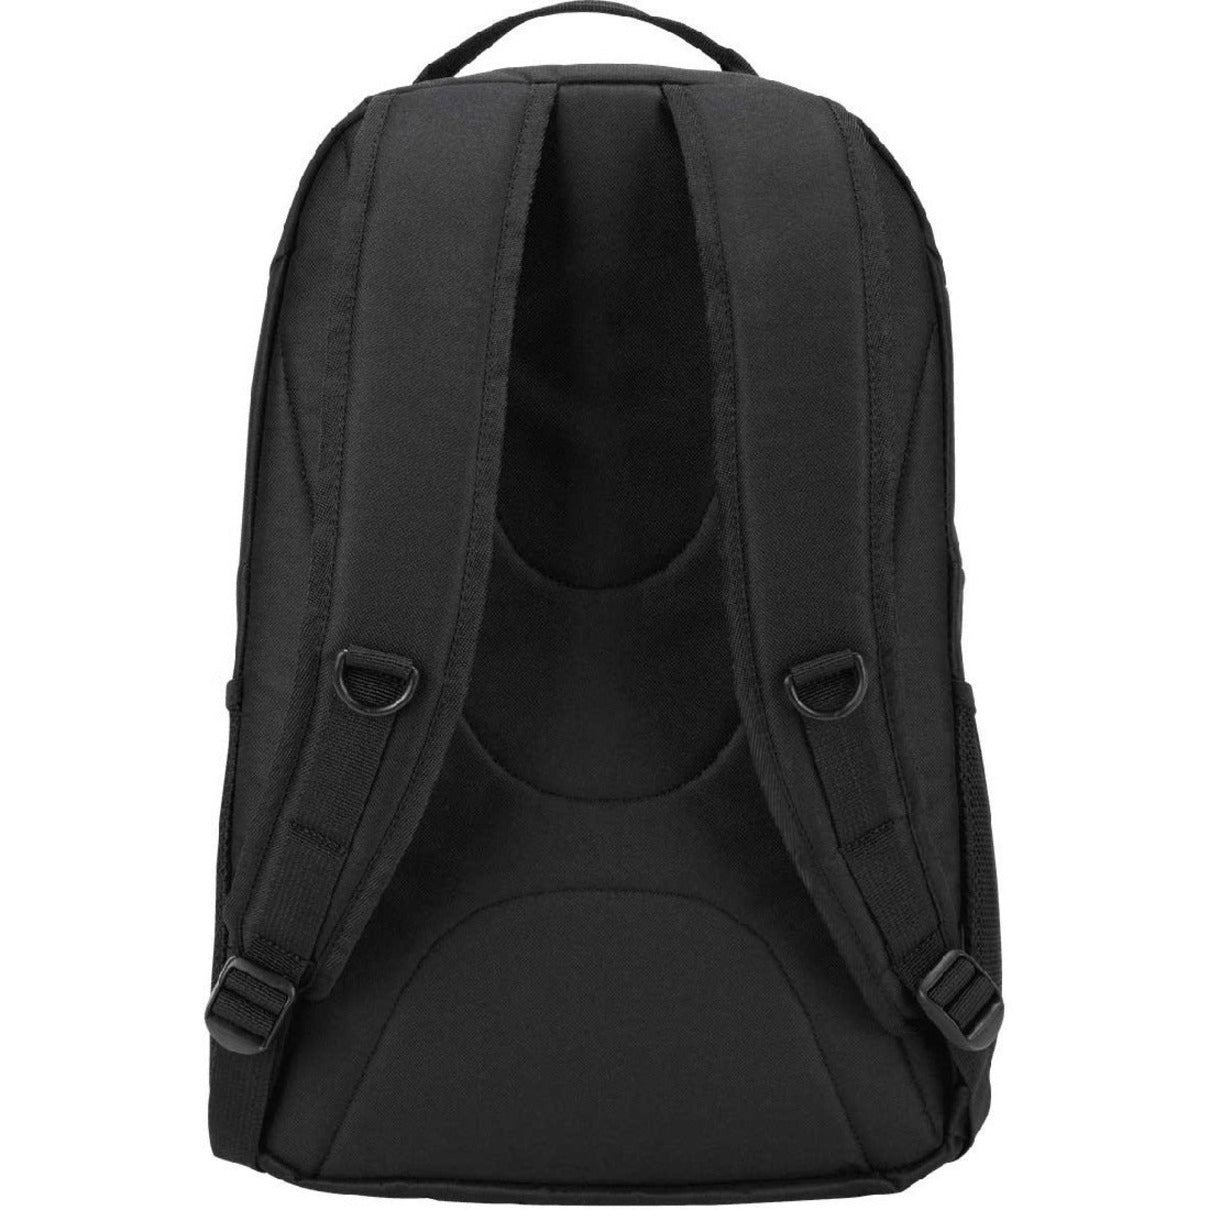 Targus Motor TSB194US Carrying Case (Backpack) for 16" Notebook Cell Phone - Black